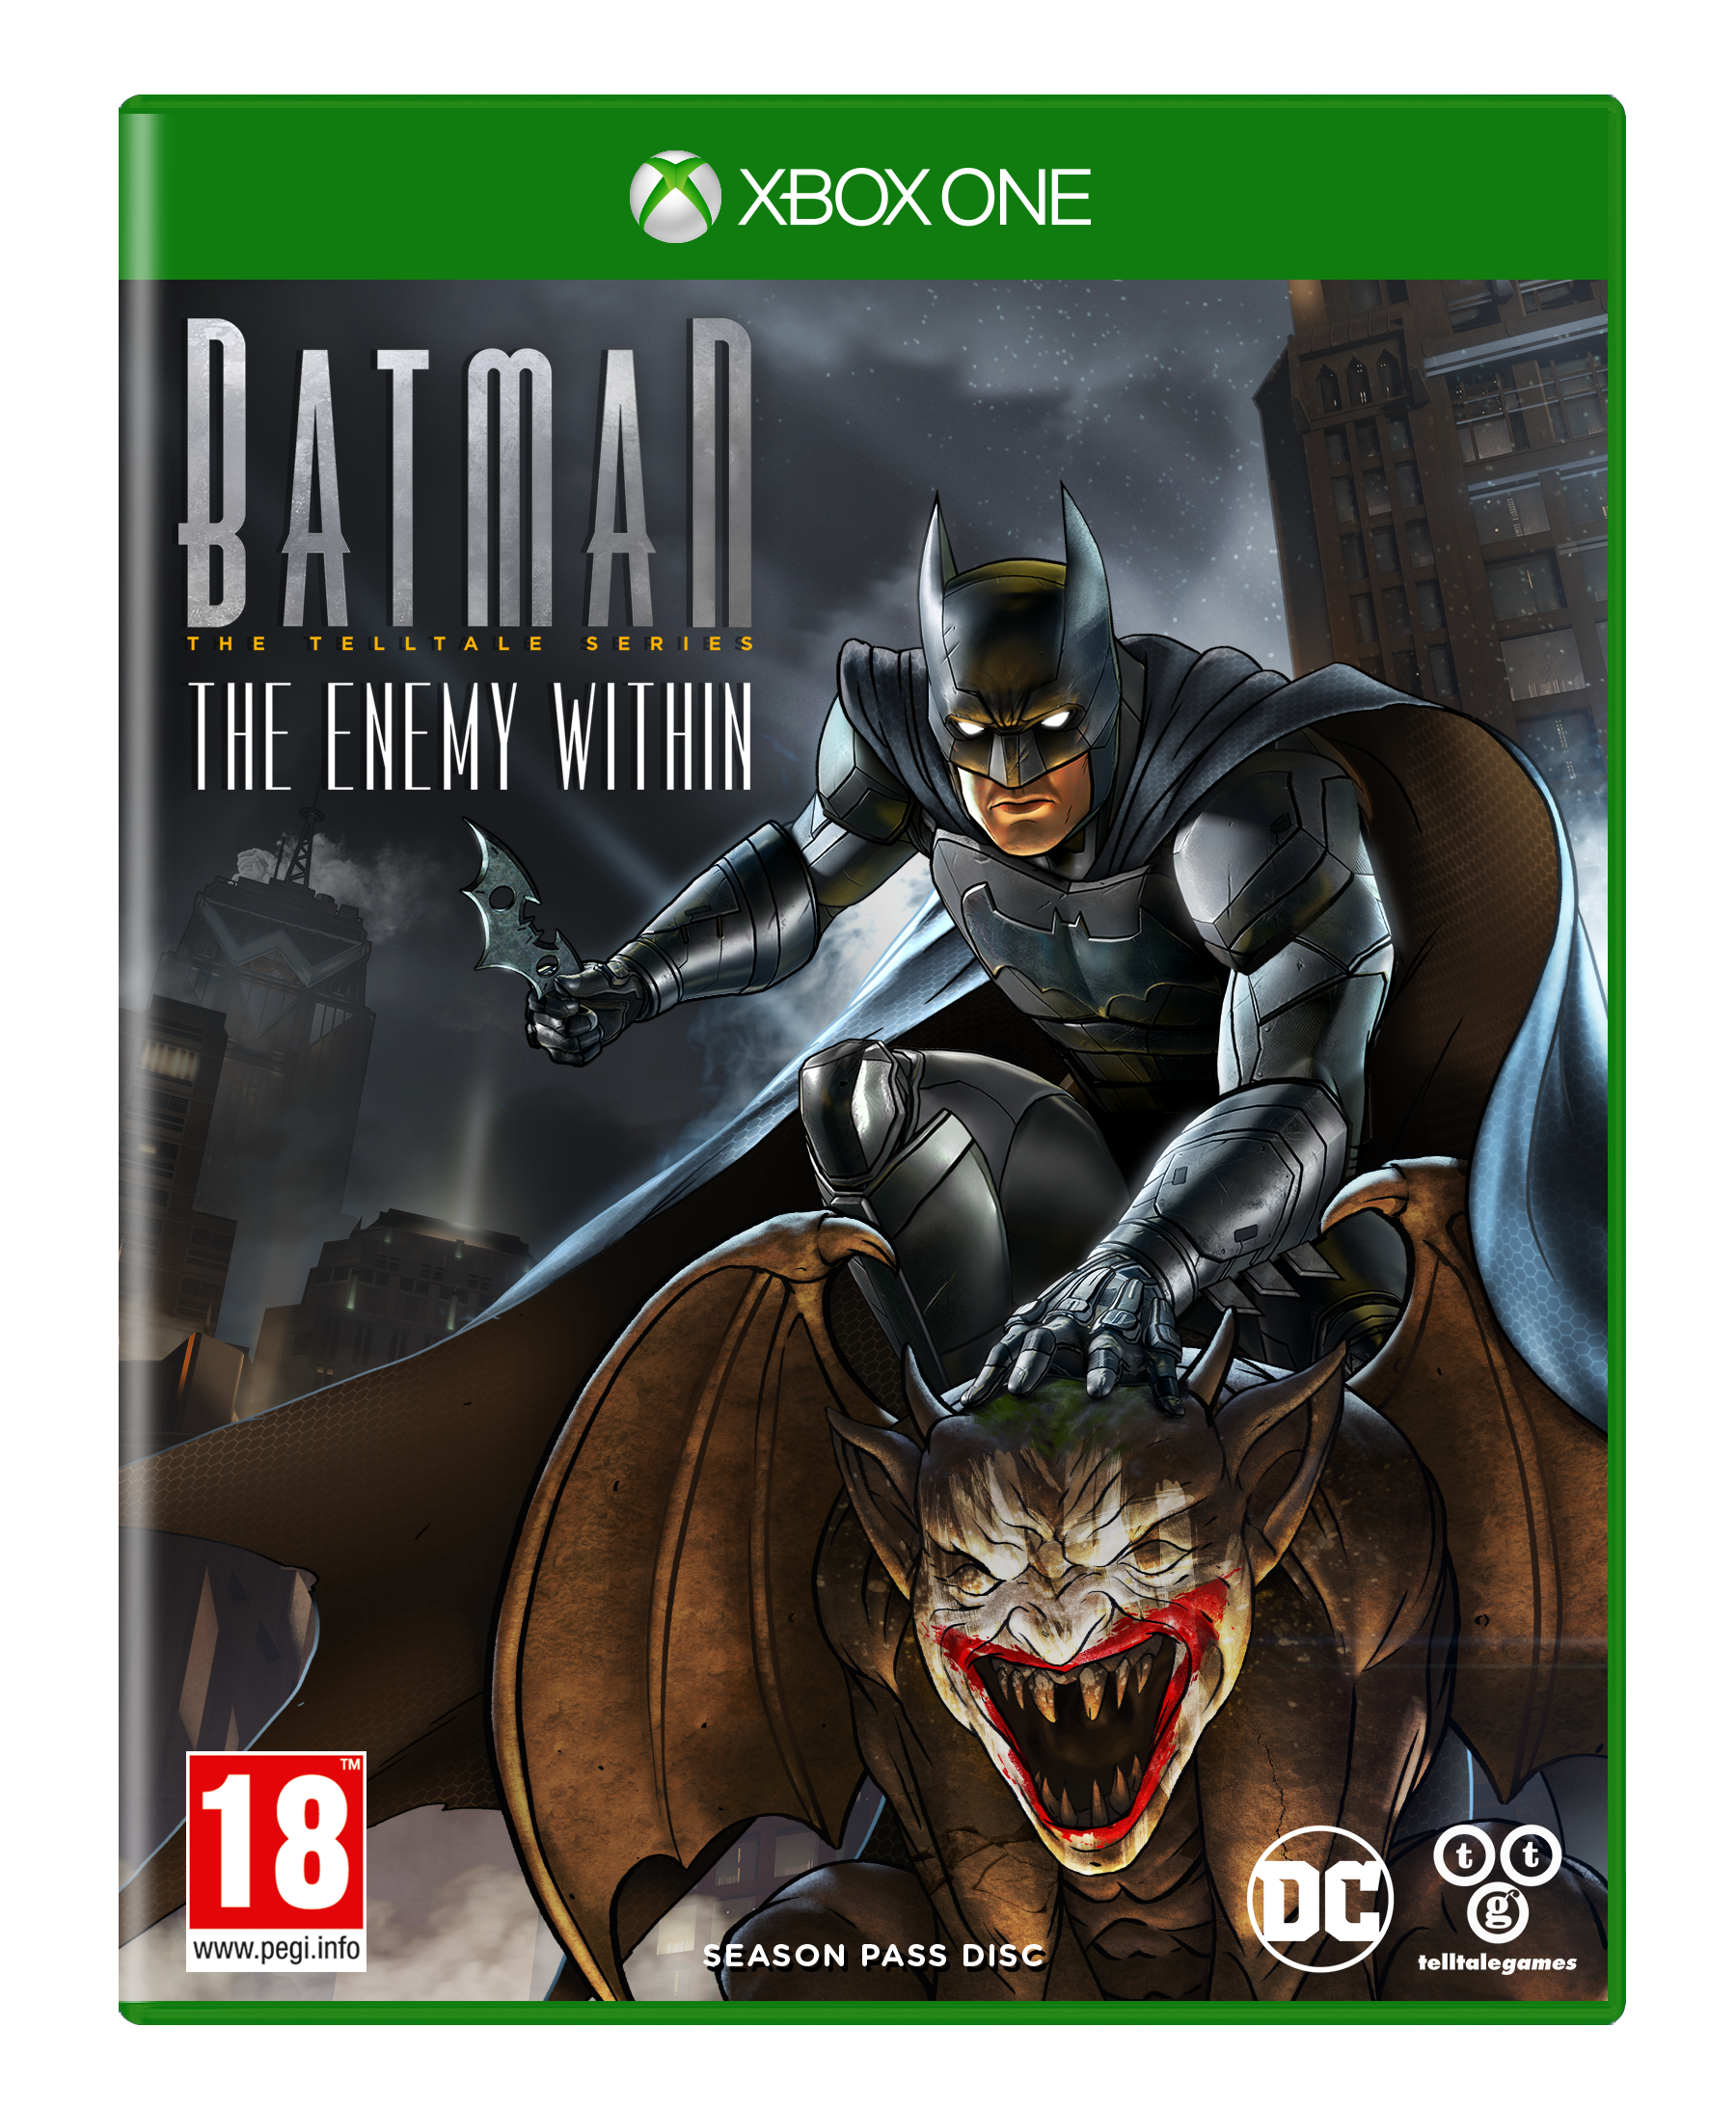 batman telltale the enemy within download